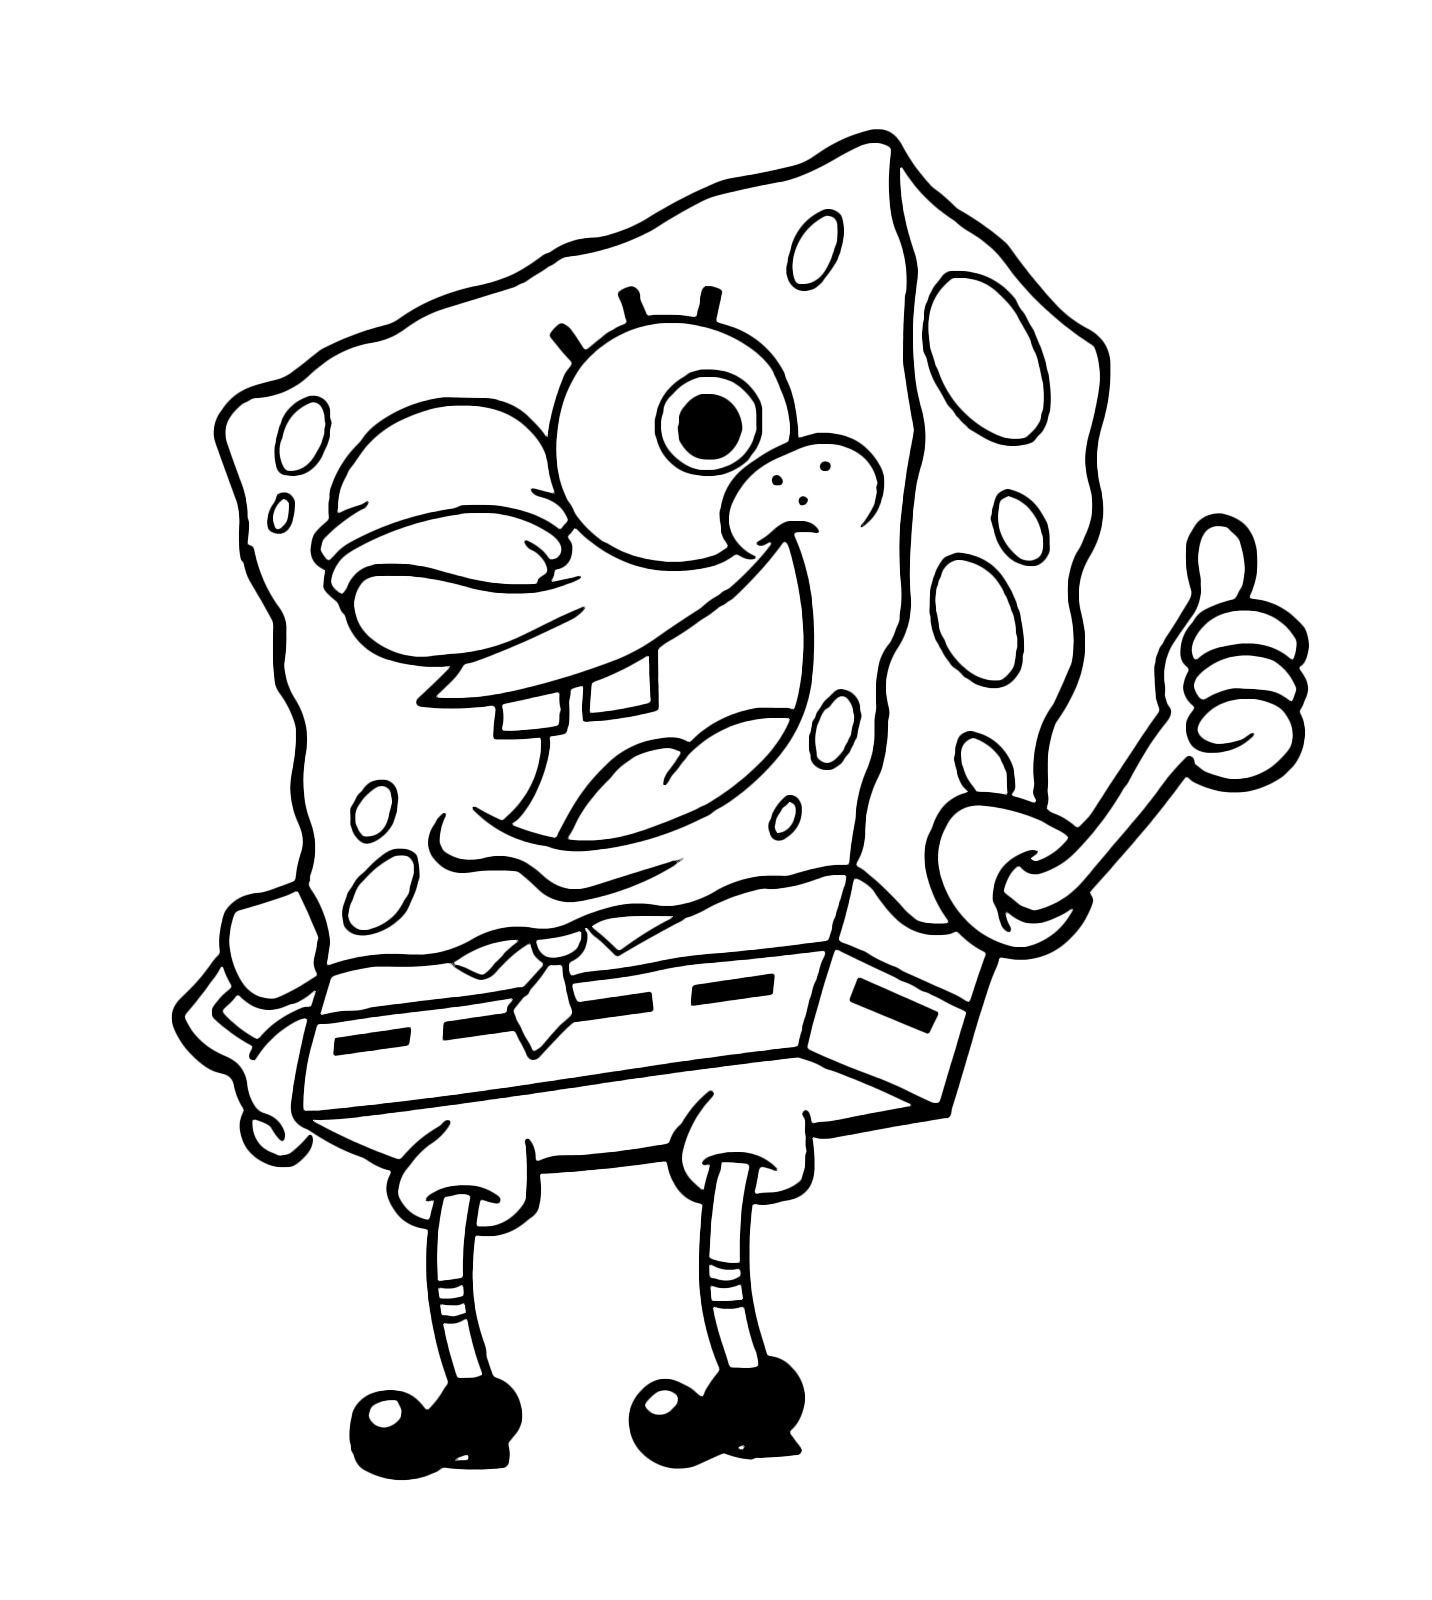 SpongeBob coloring page - SpongeBob winks. sea,sponge,spongebob,squarepants...